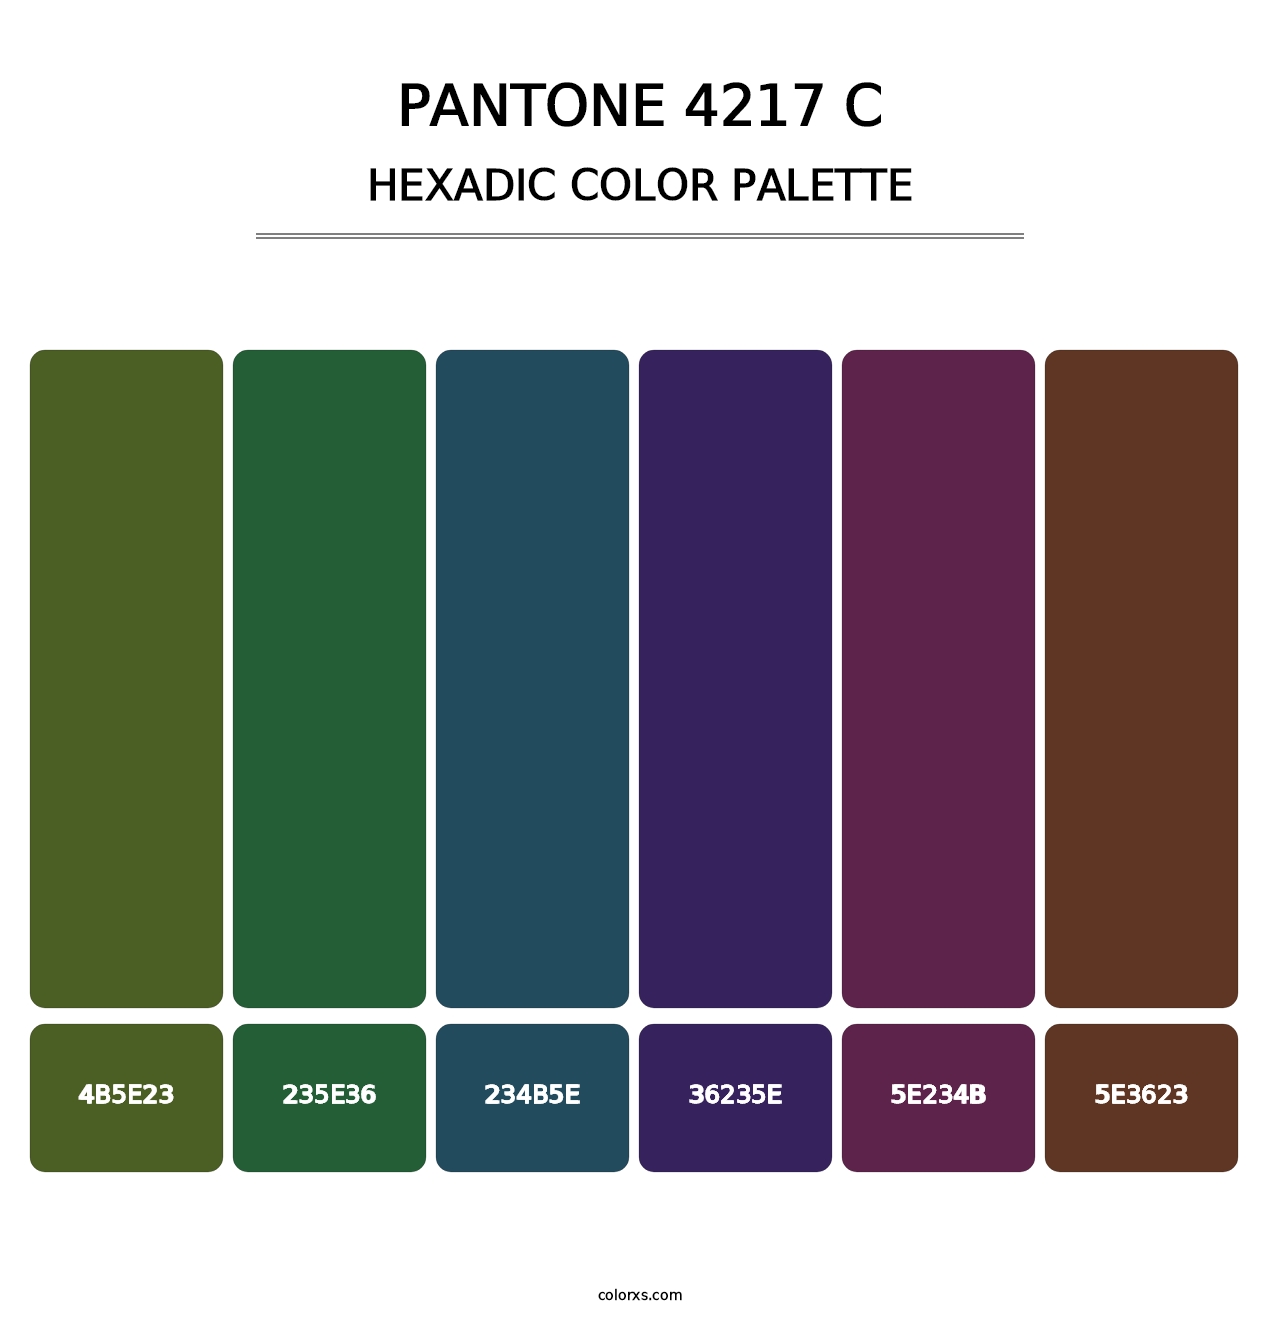 PANTONE 4217 C - Hexadic Color Palette